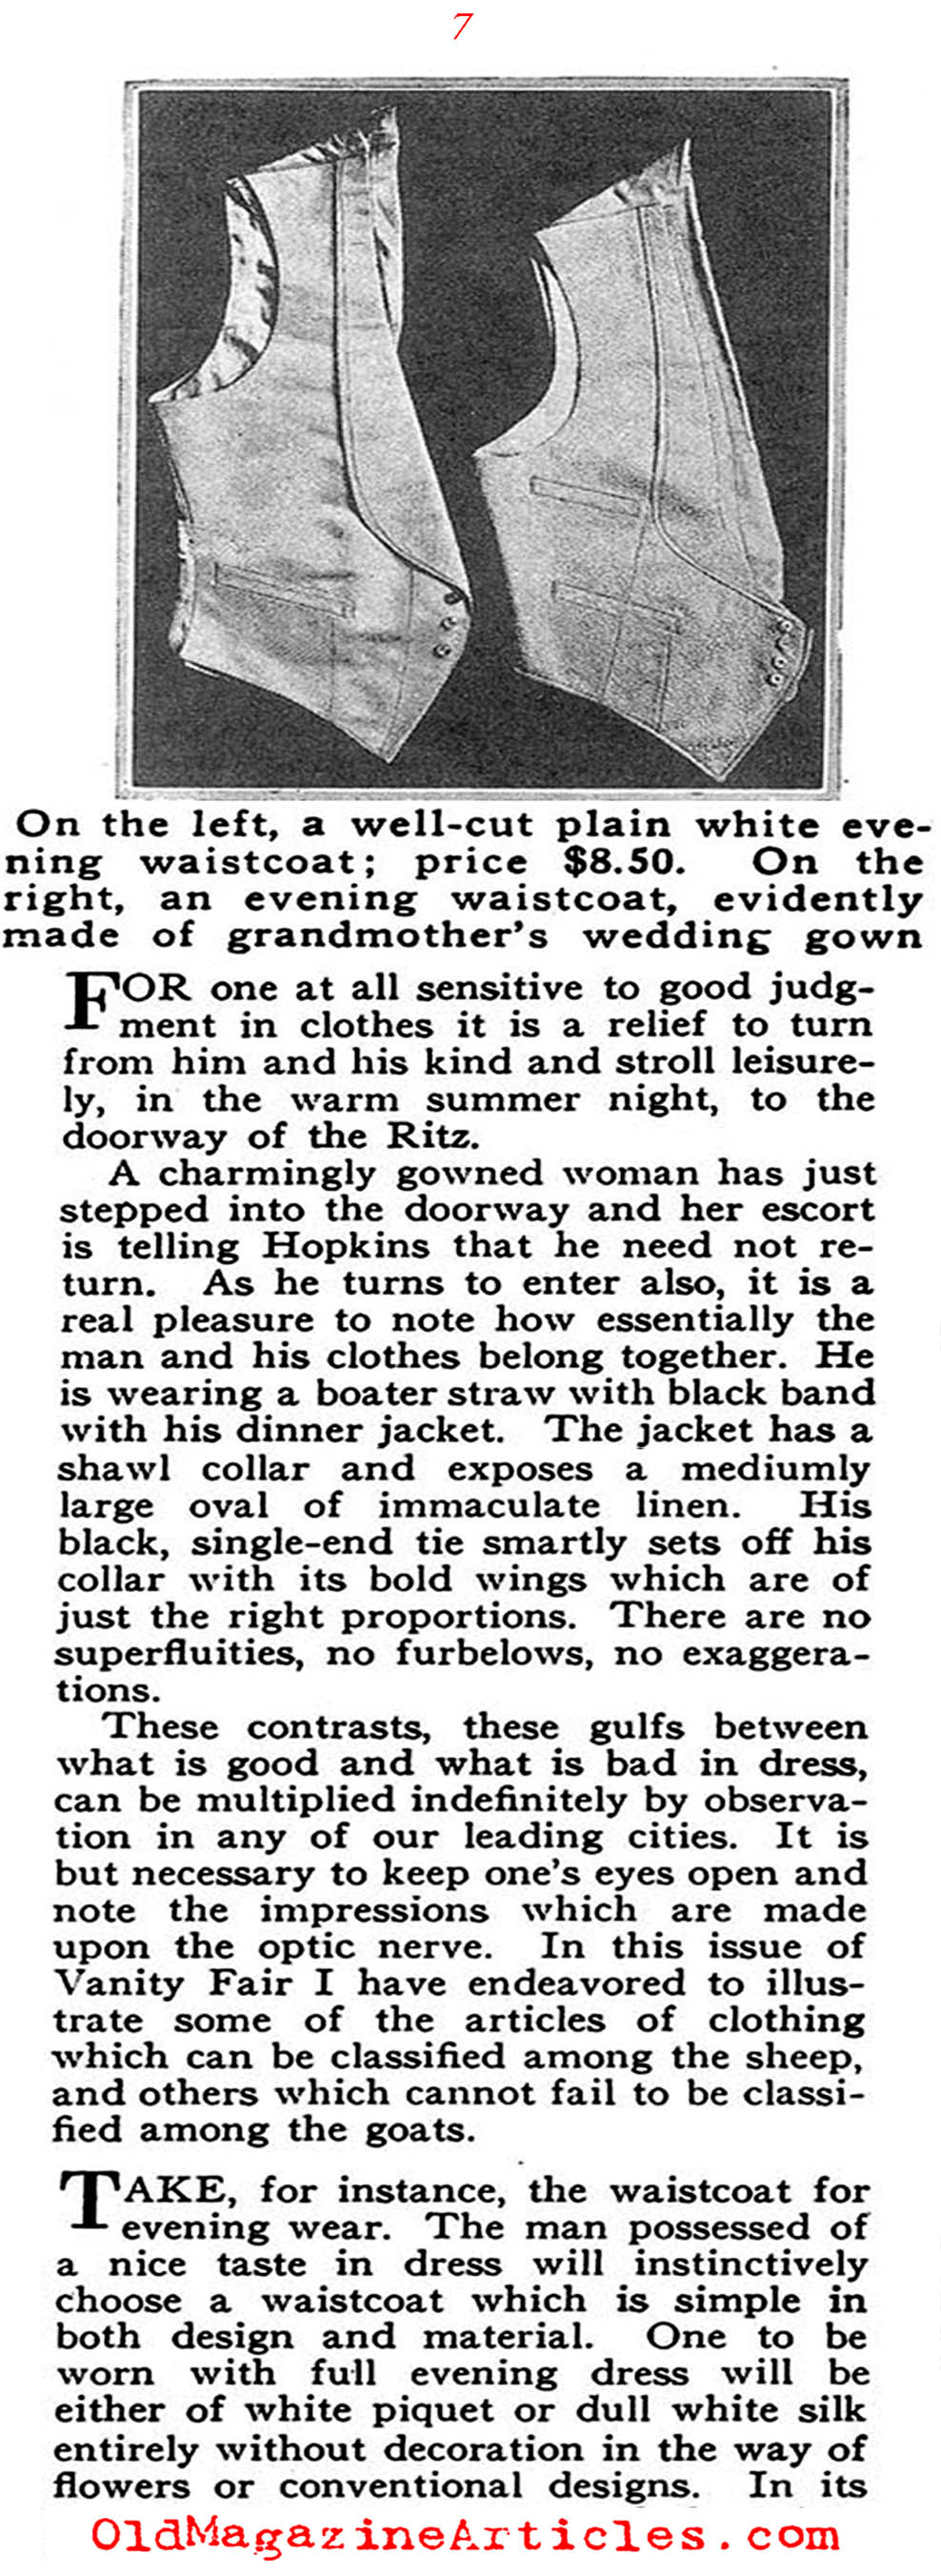 The Well Dressed Man Confronts Bad Taste  (Vanity Fair Magazine, 1918)